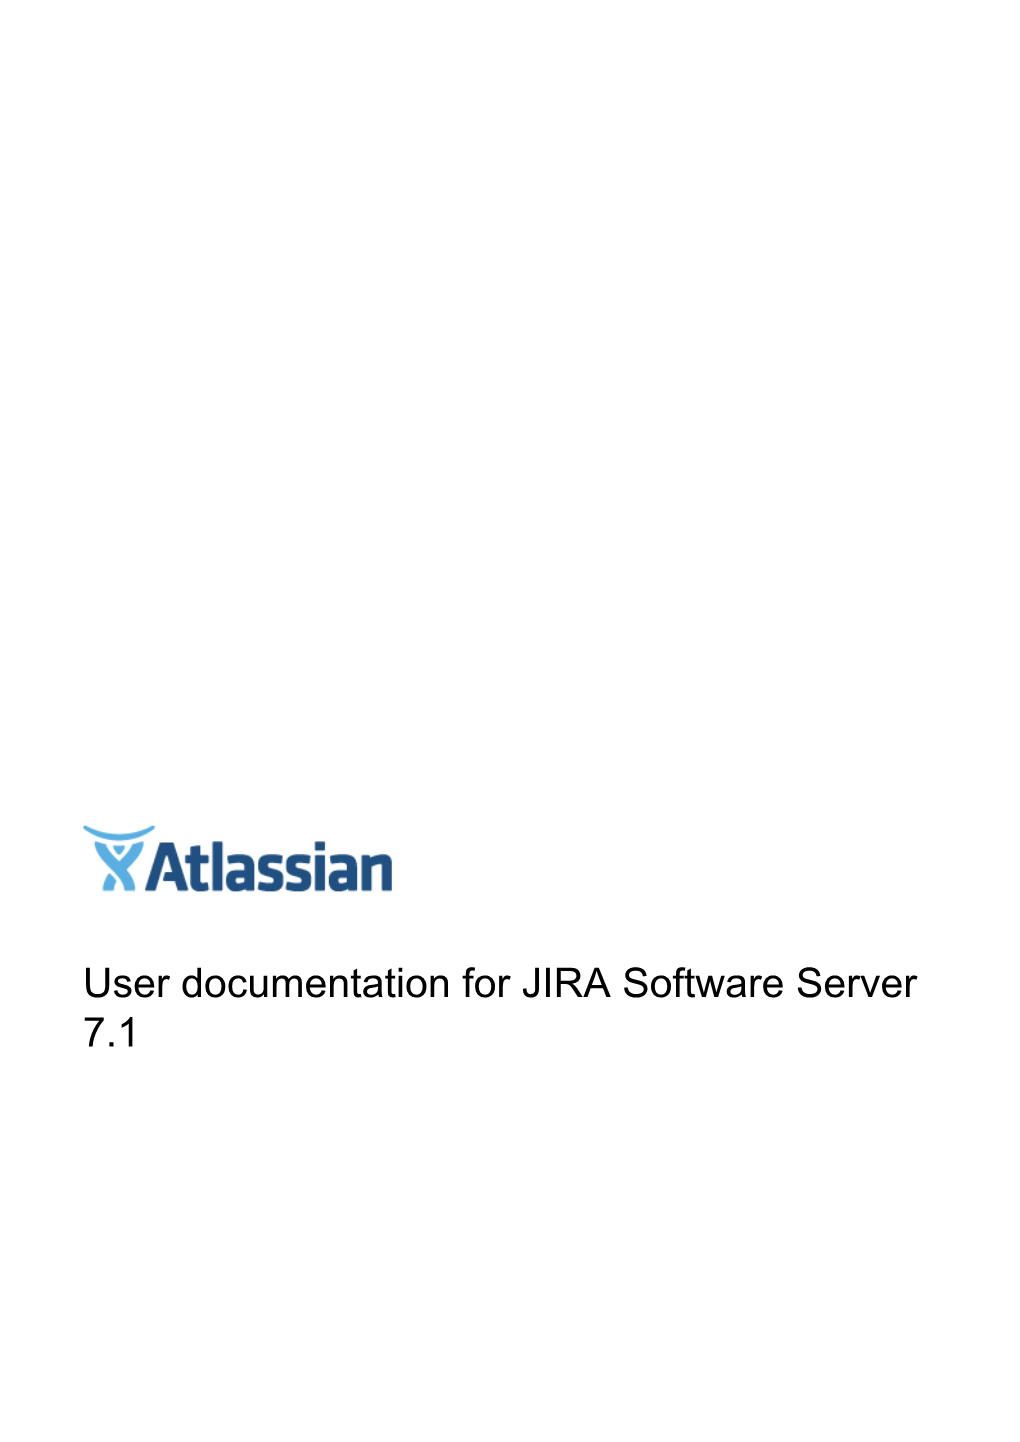 User Documentation for JIRA Software Server 7.1 User Documentation for JIRA Software Server 7.1 2